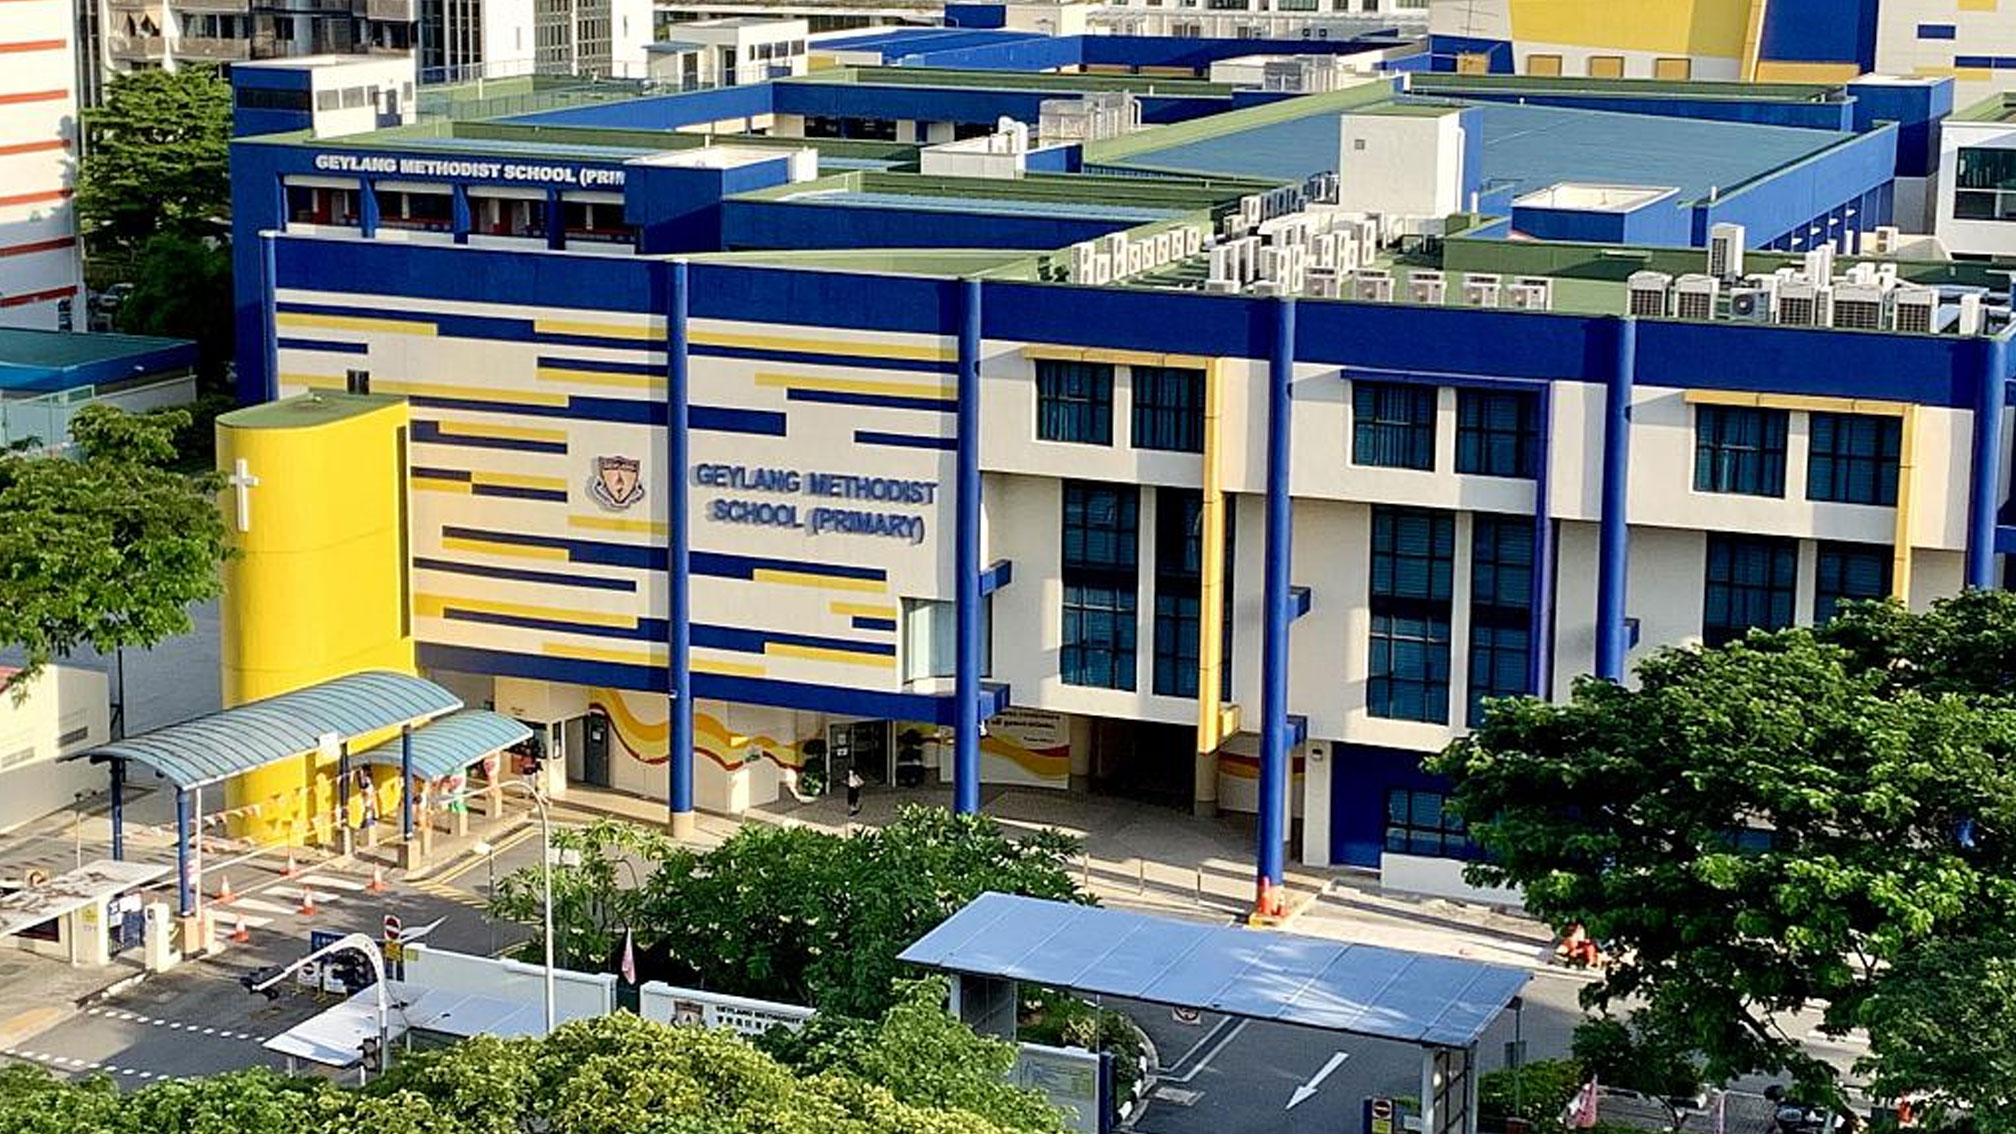 Geylang condo Singapore: Fuji Vista close to Geylang Methodist School (Primary)